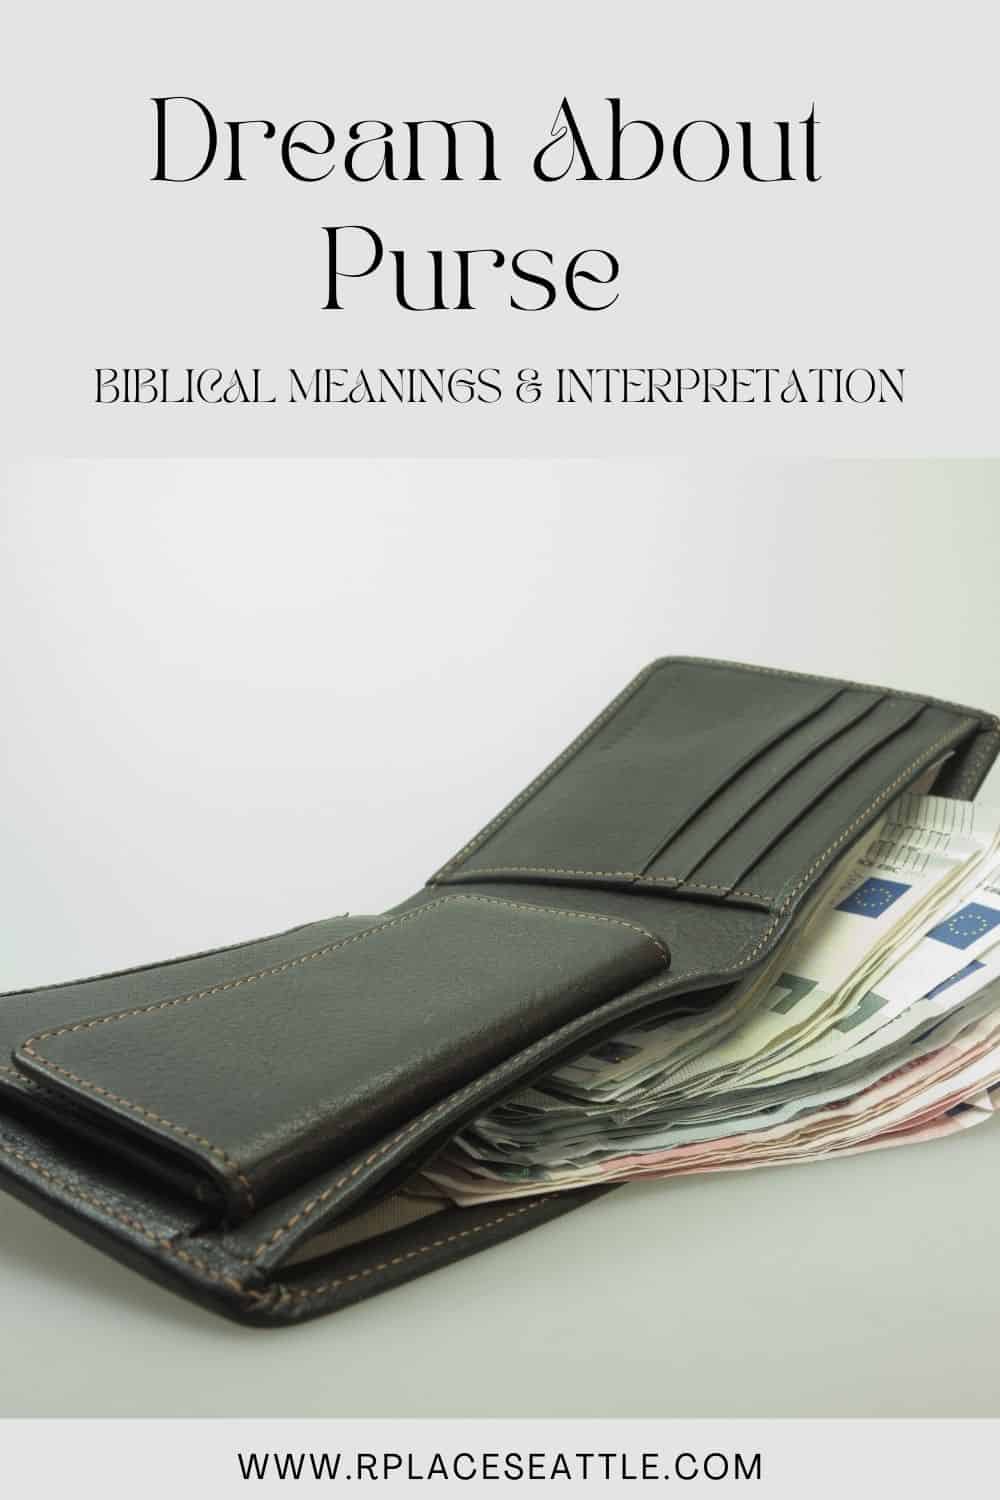 Dream About Purse (Biblical Meanings & Interpretation)